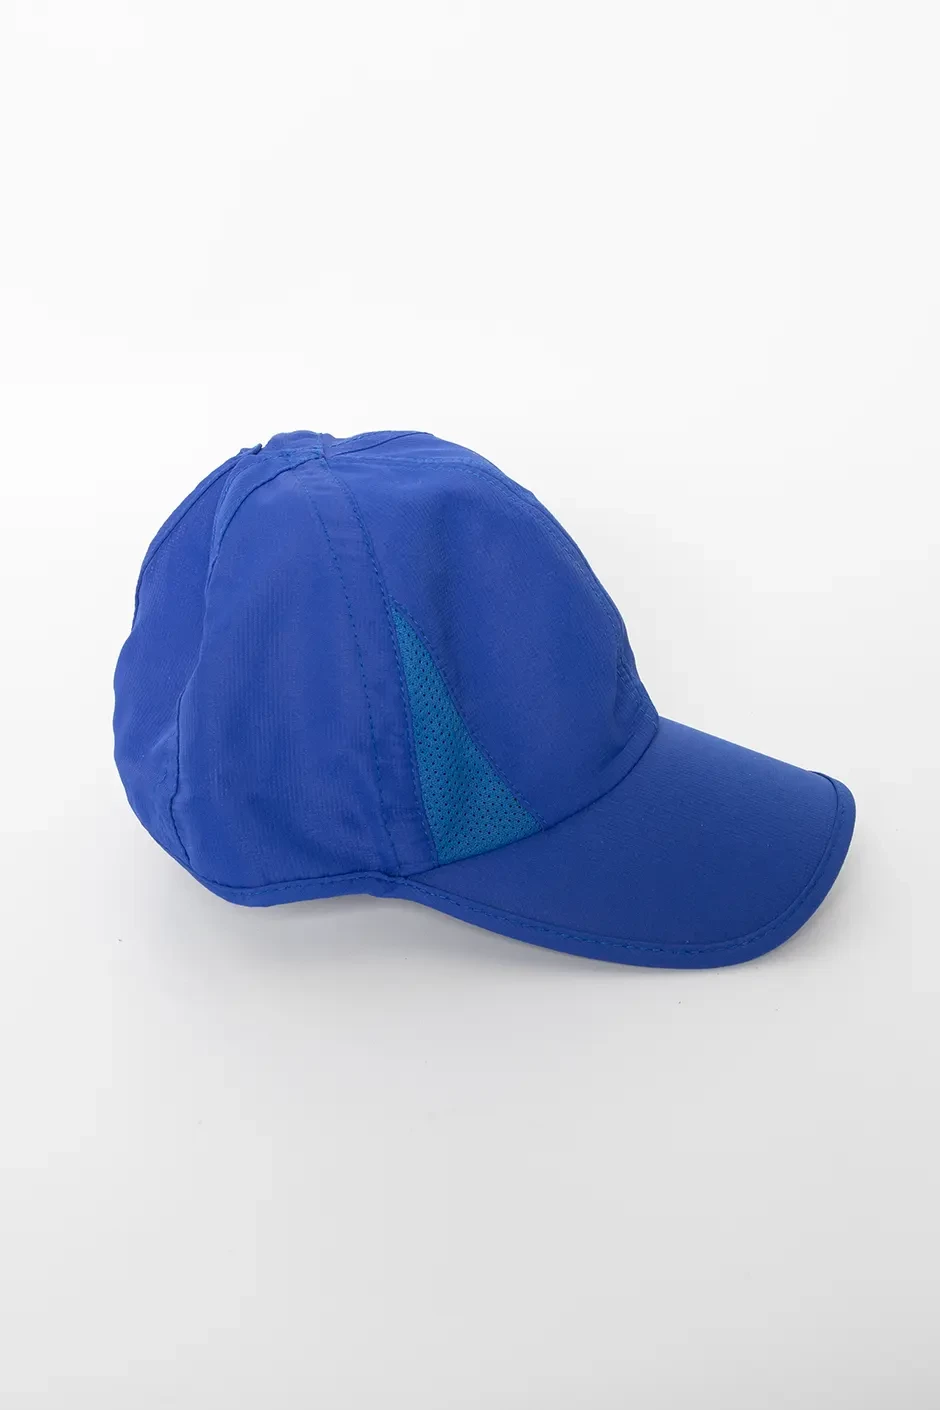 Teapot Hat Title Boxing Hats for Men Ponytail Hats Hole Men's Foldable Mesh Wide Cap Hat Sun Baseball Caps Fitted Work Hats for Men High Bun Baseball